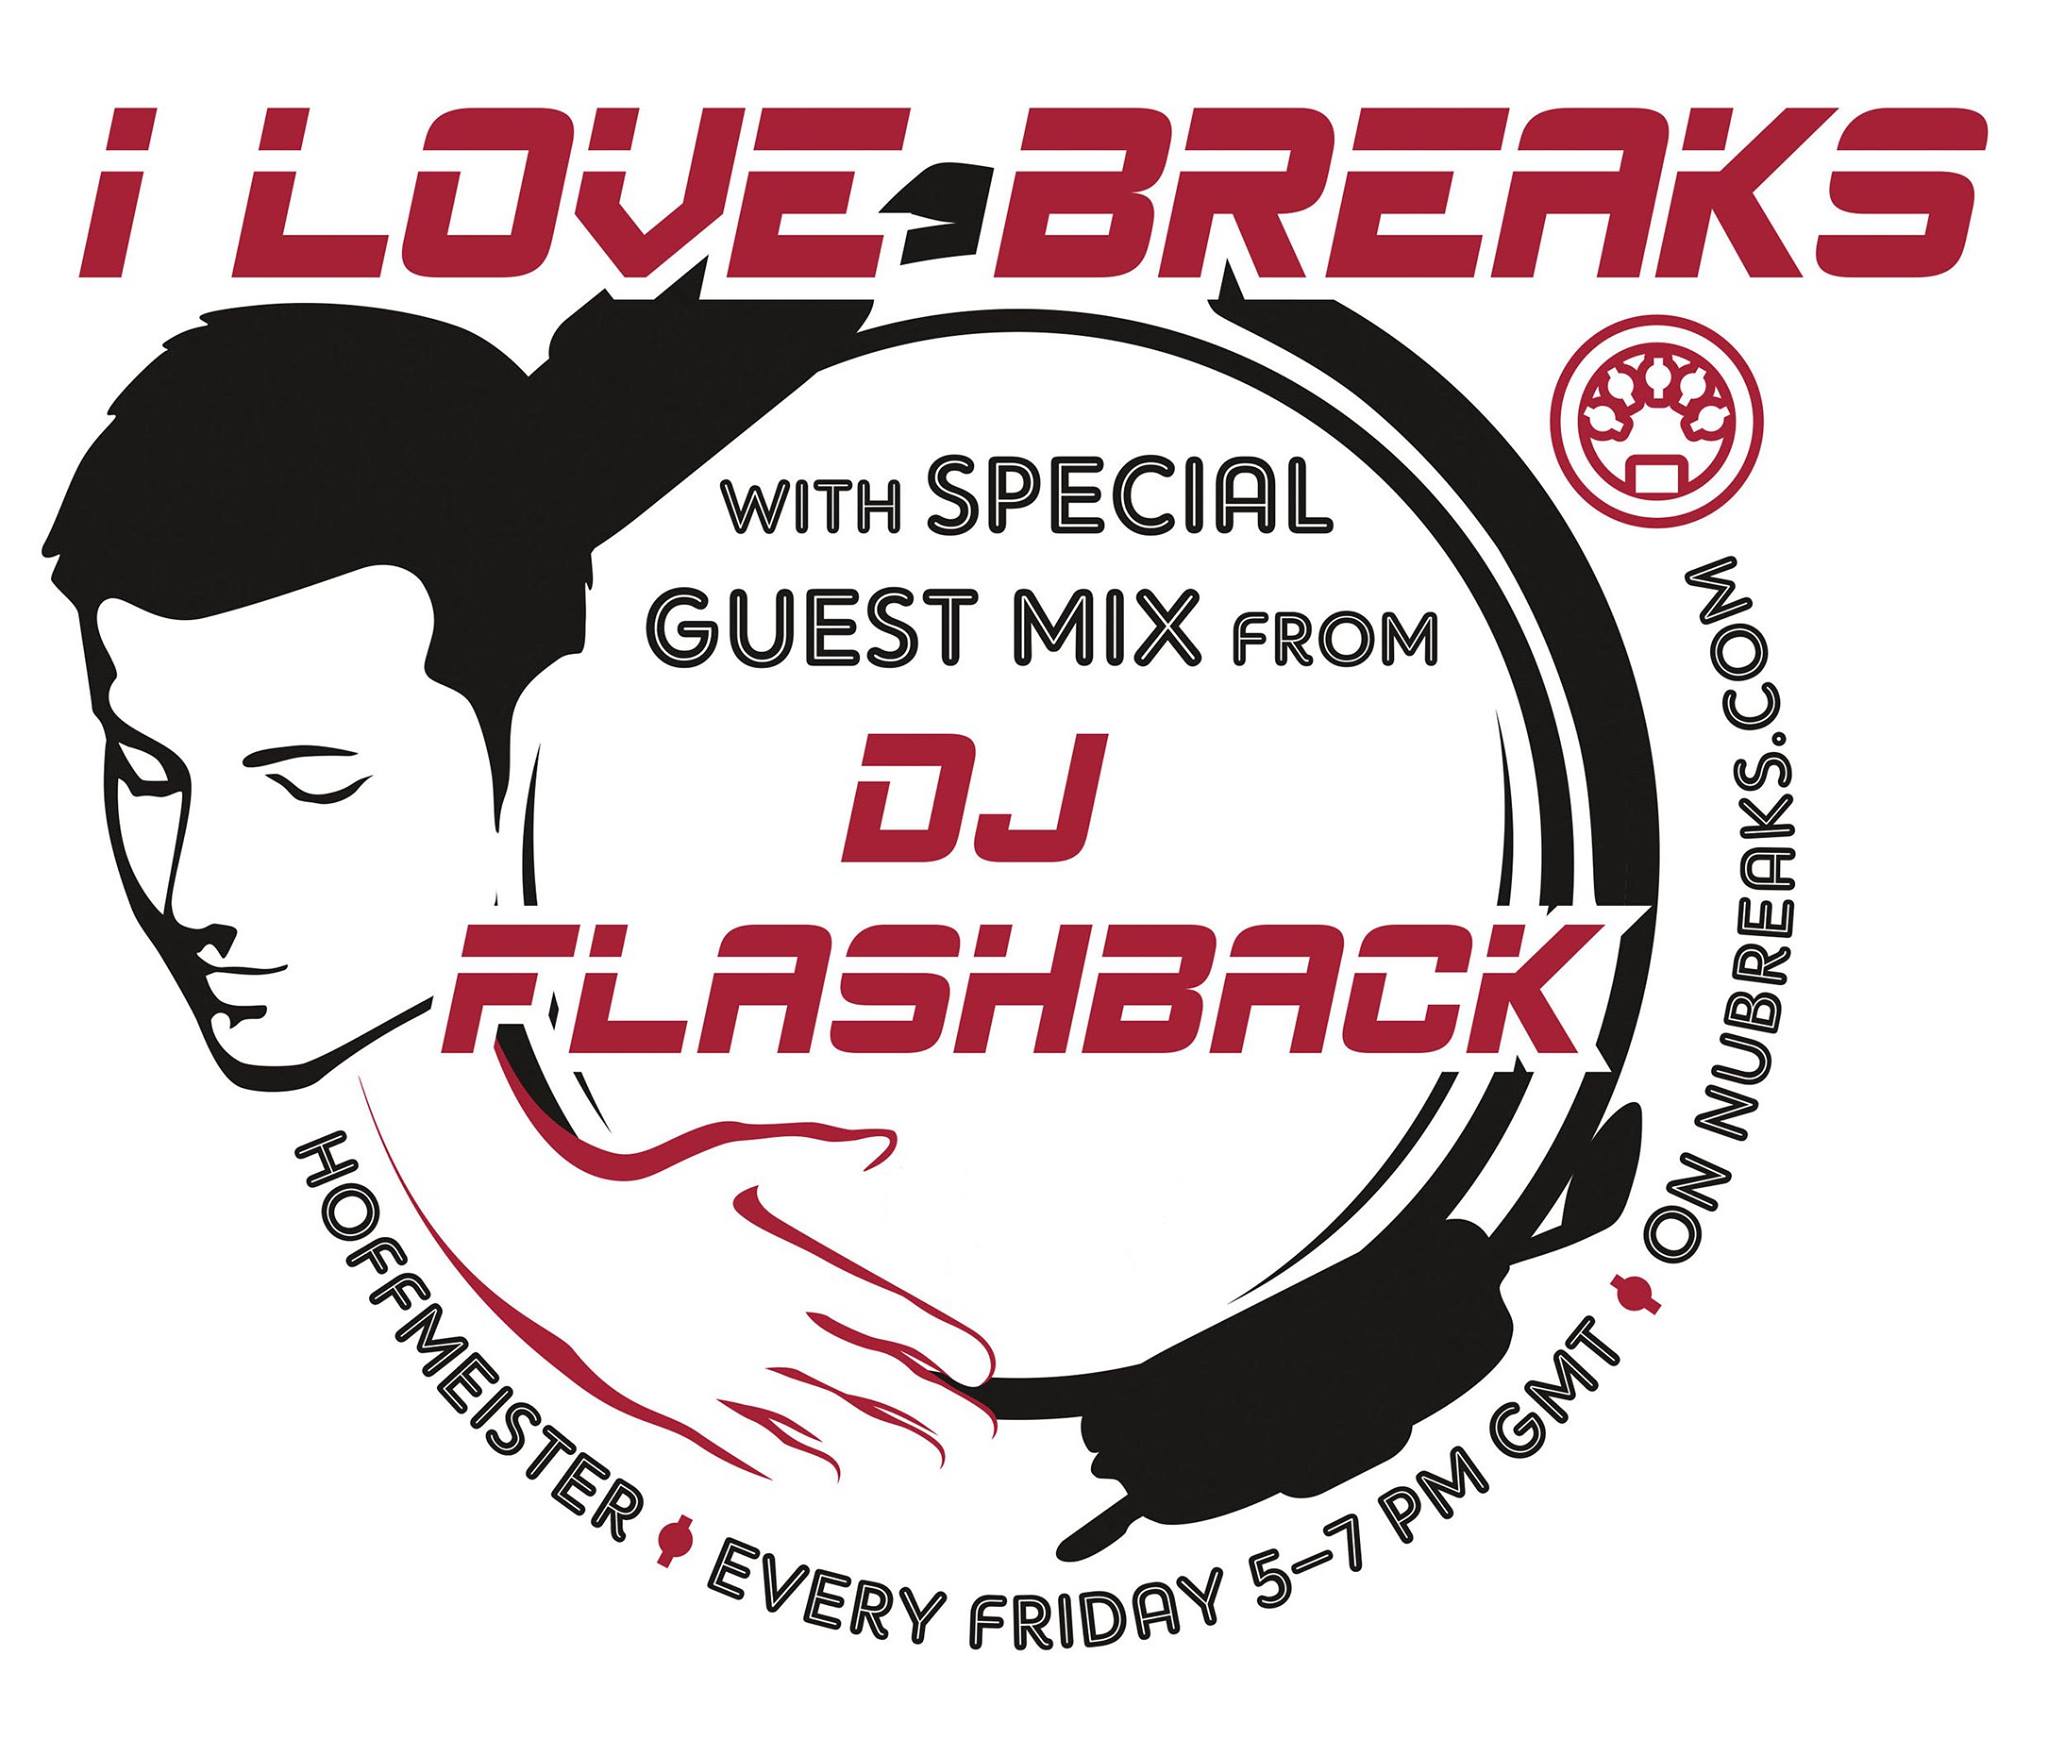 I Love Breaks proudly presents DJ Flashback!